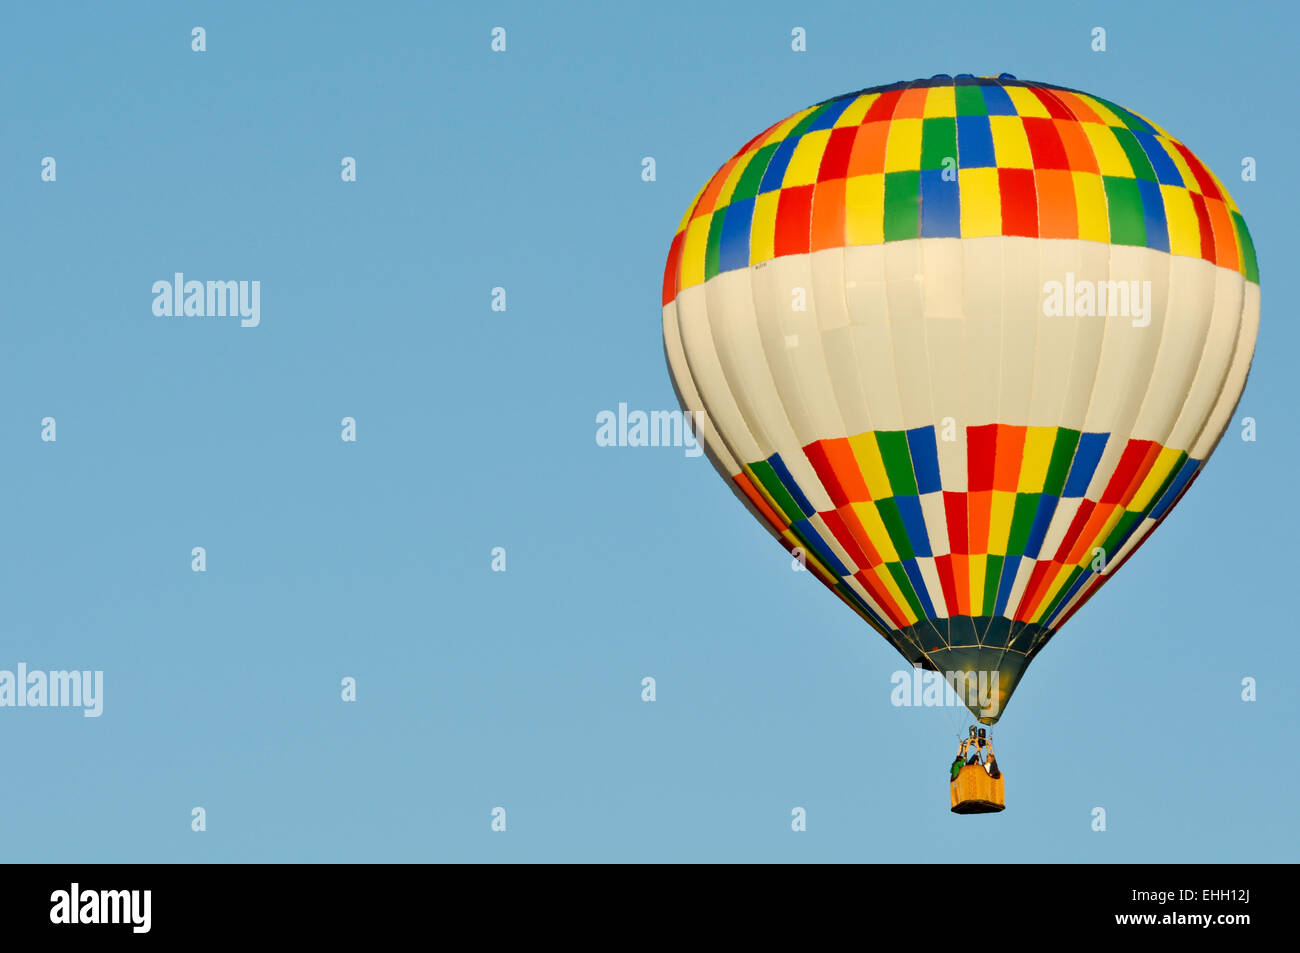 Hot Air Ballon with Copy Space Left Stock Photo